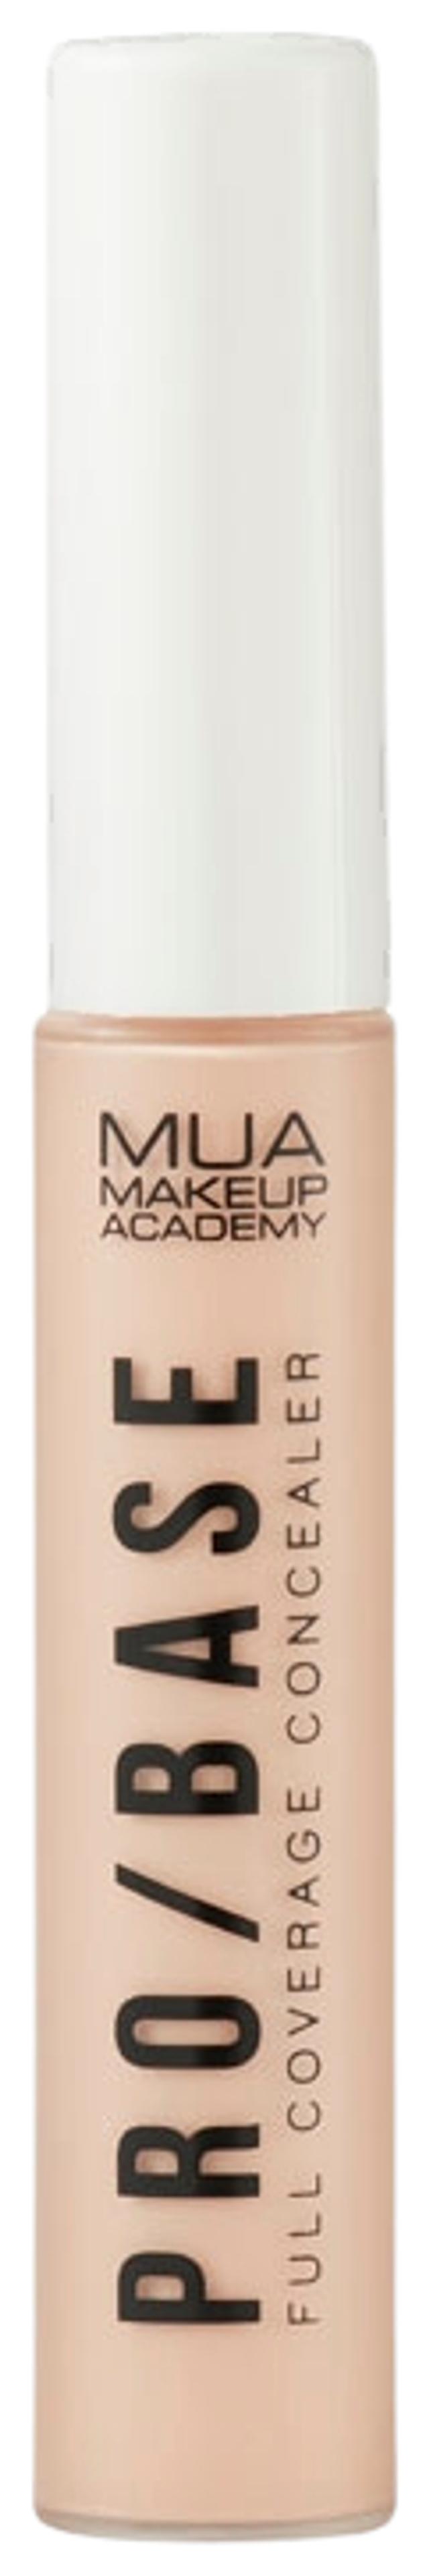 MUA Make Up Academy Pro Base Full Cover Concealer 7,8 g 120 peitevoide